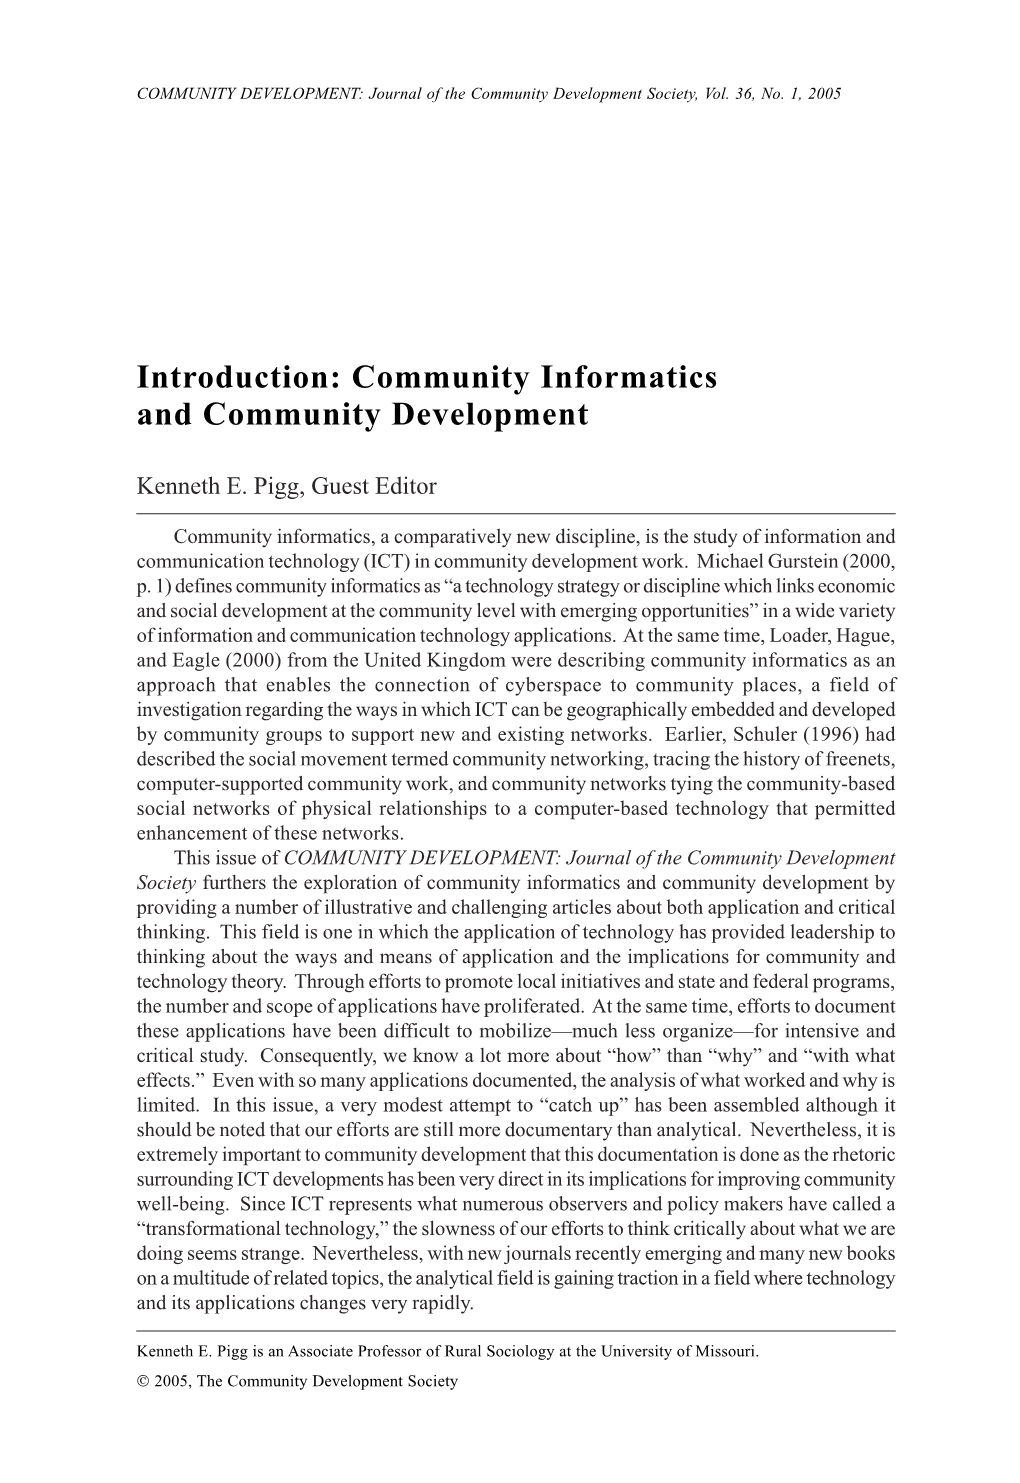 Introduction: Community Informatics and Community Development